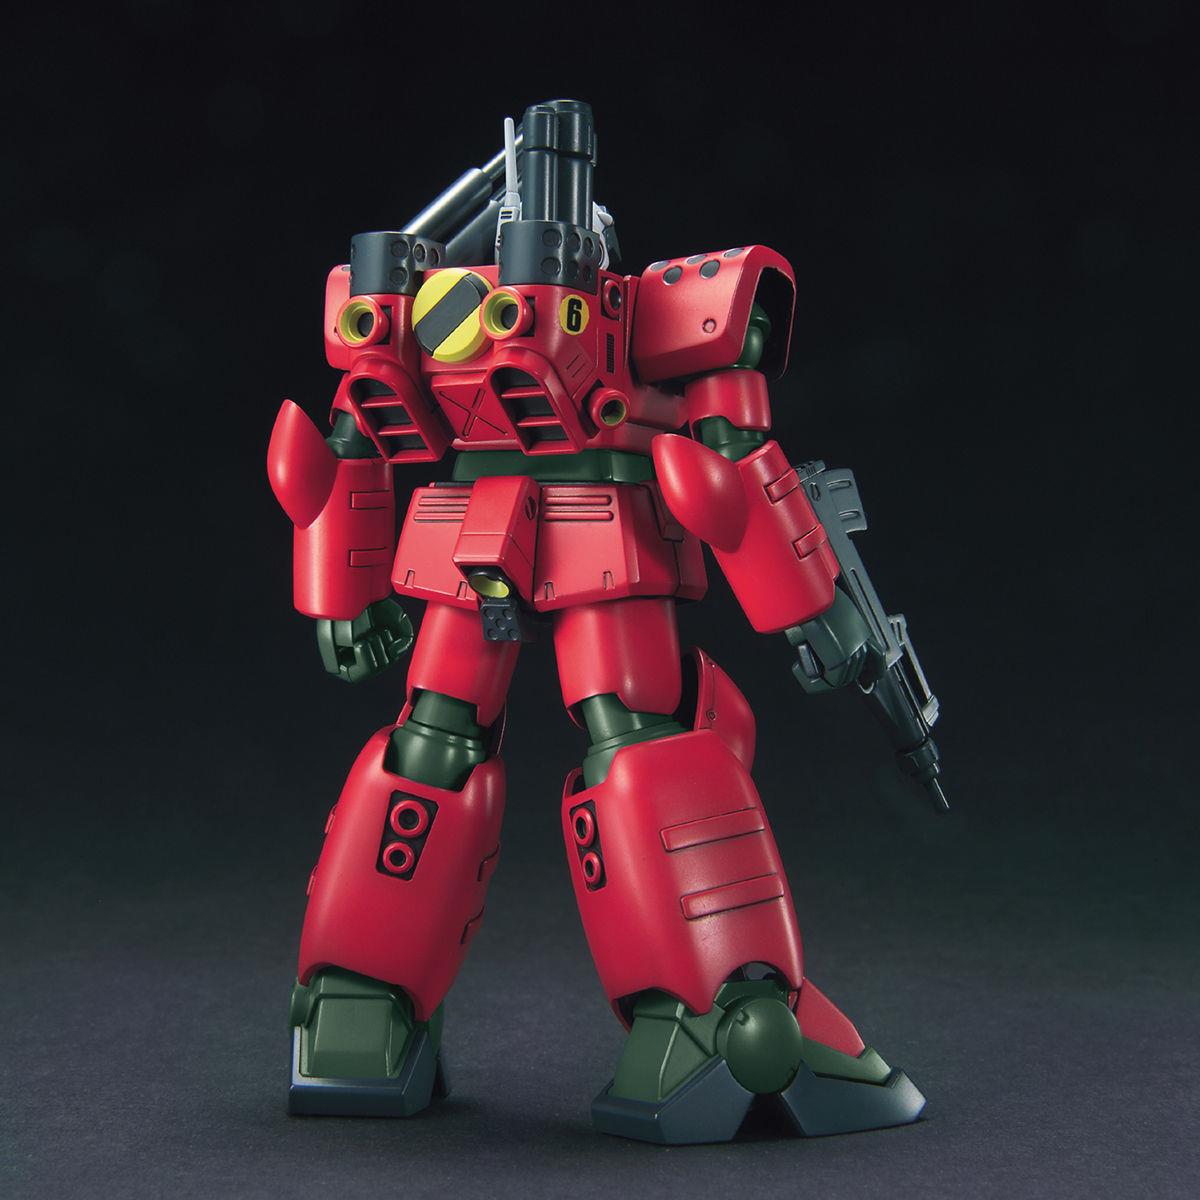 Gundam UC: Guncannon Mass Production Type HG Model